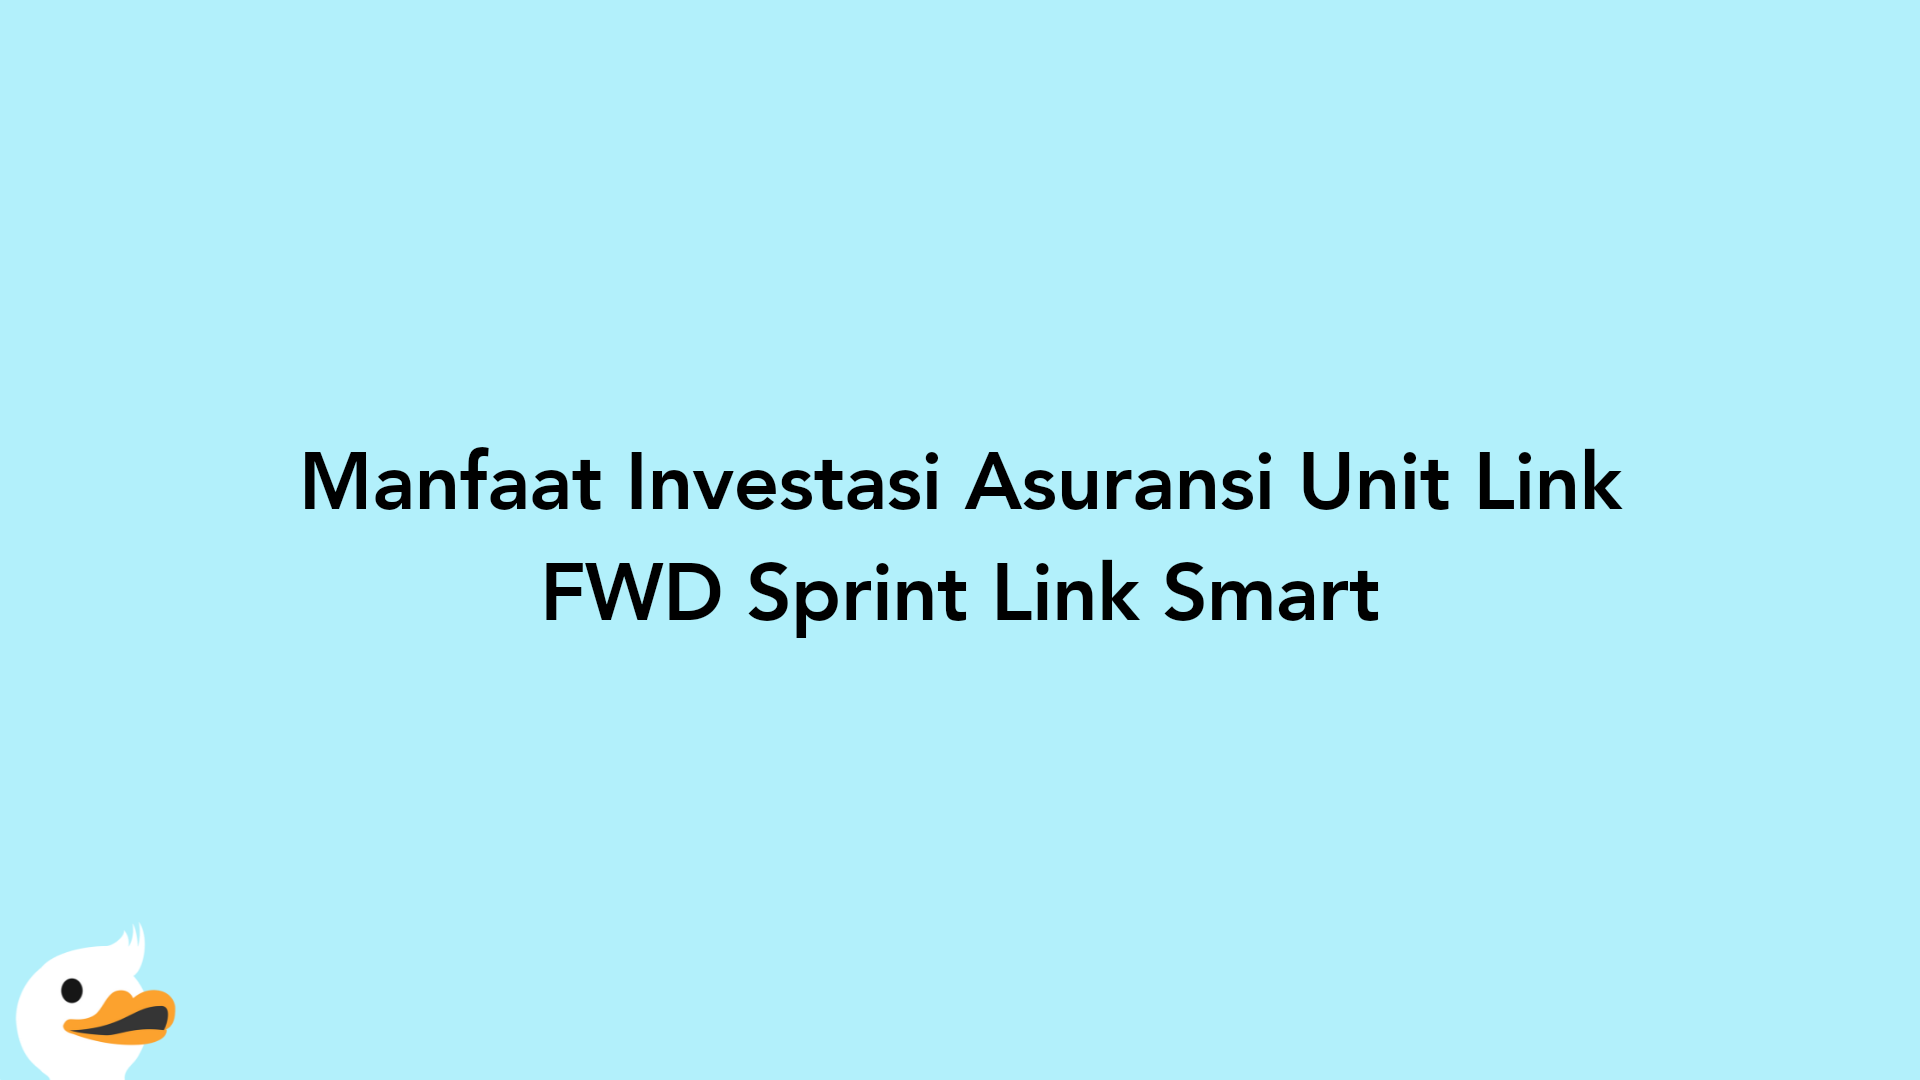 Manfaat Investasi Asuransi Unit Link FWD Sprint Link Smart